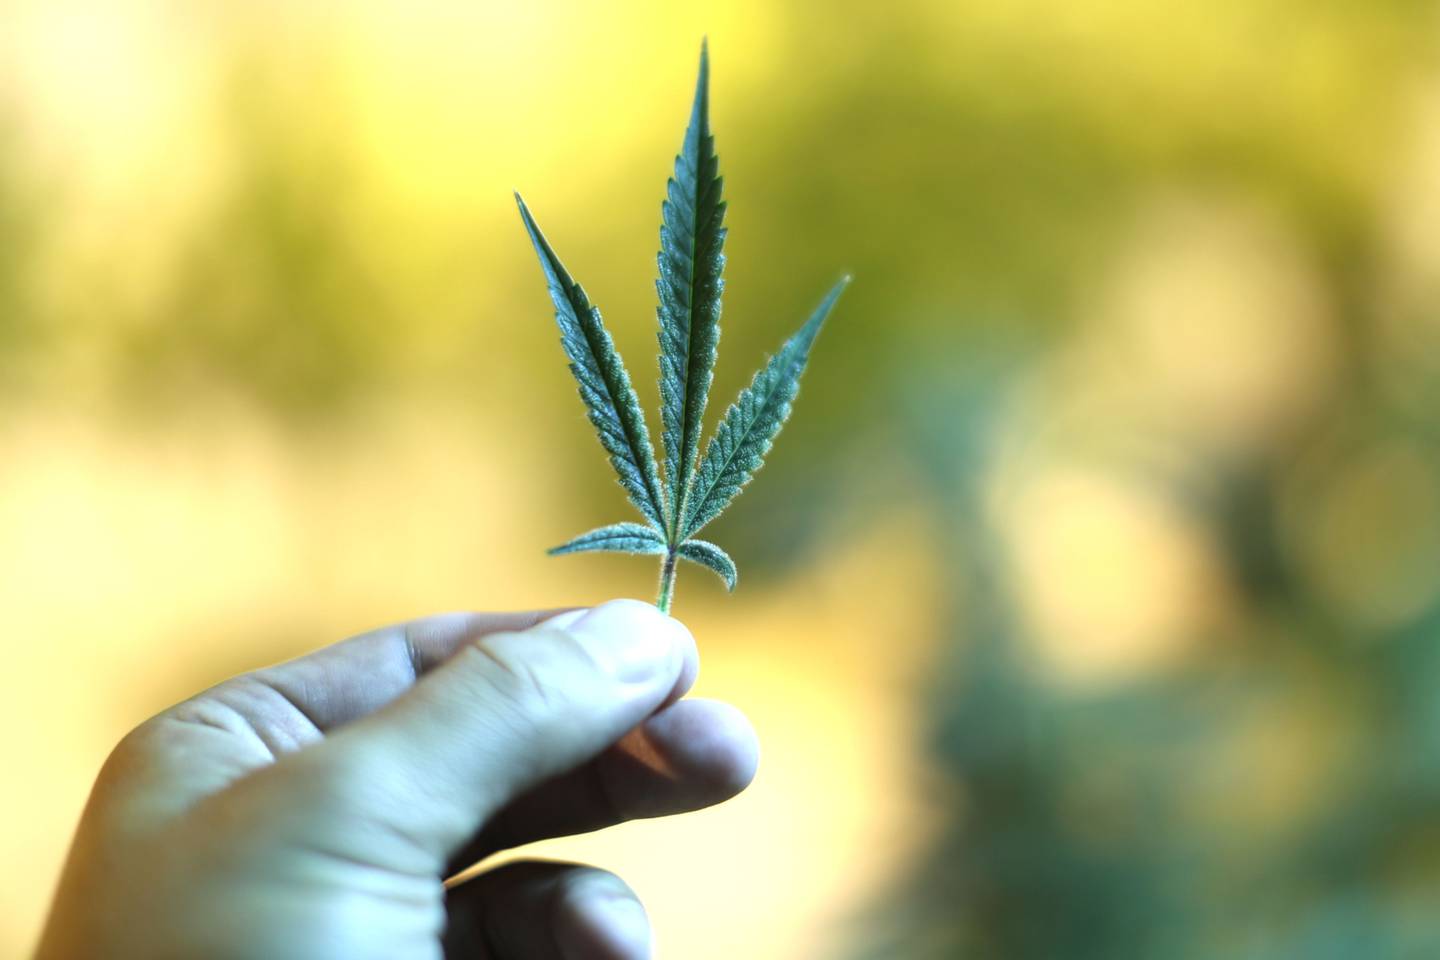 Uruguay led the world in legalizing most uses of marijuana in 2013.